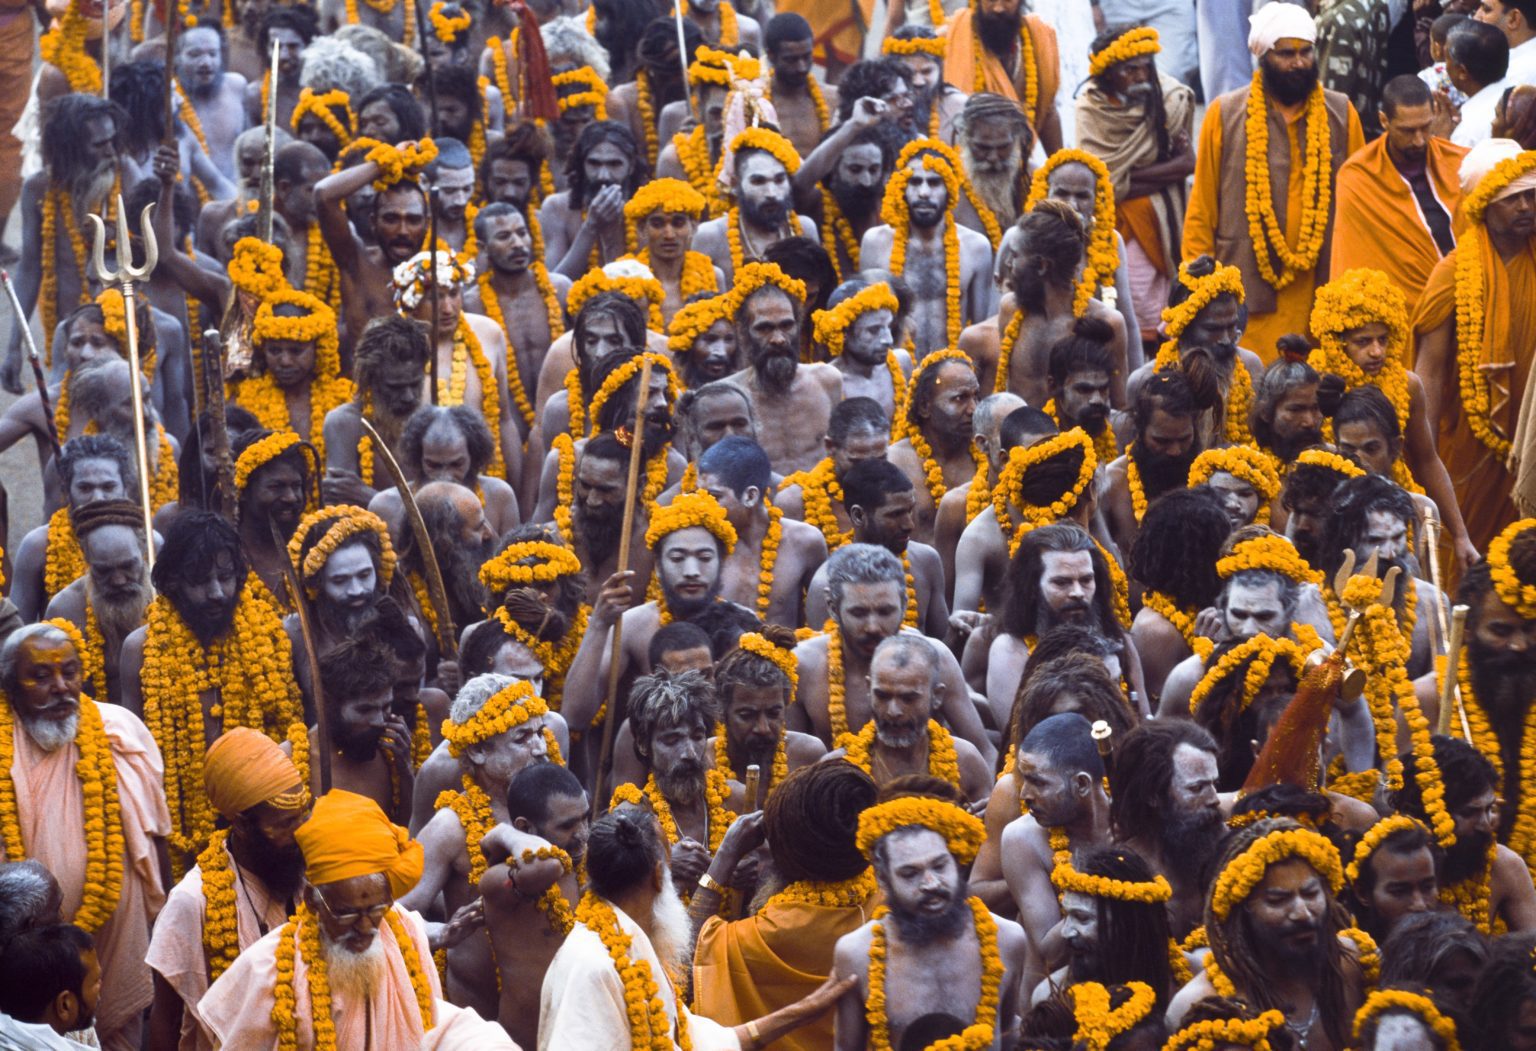 parade of the Sadhus in kumbh mela seen on an Indian Subcontinent safari